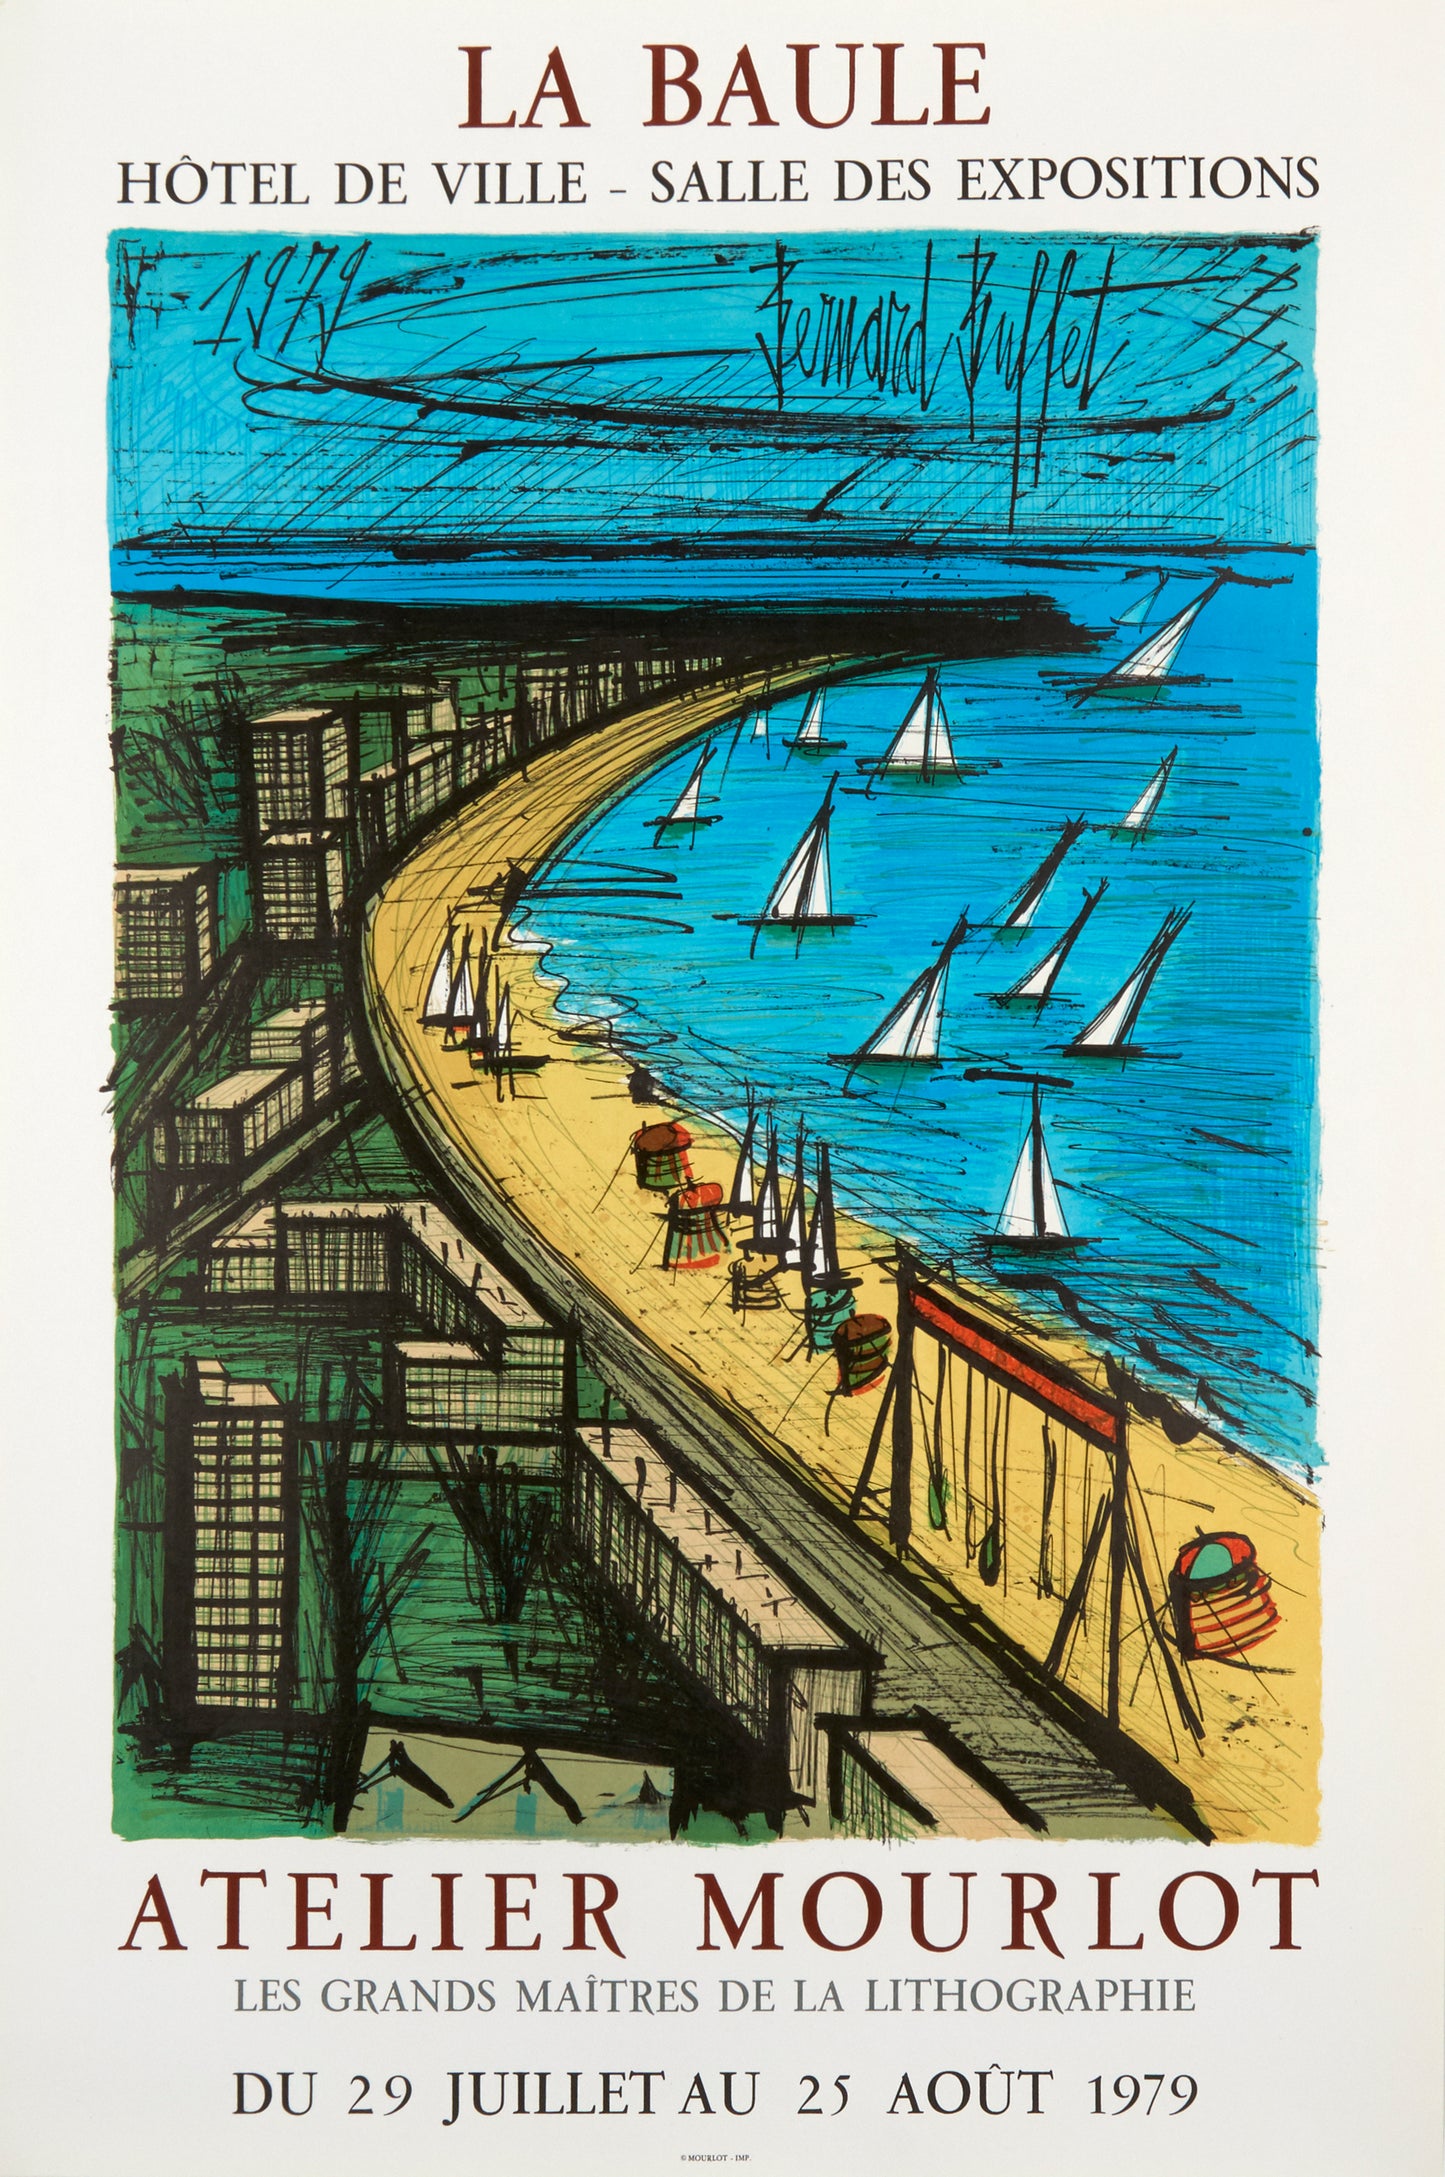 Atelier Mourlot, La Baule by Bernard Buffet, 1979 - Mourlot Editions - Fine_Art - Poster - Lithograph - Wall Art - Vintage - Prints - Original